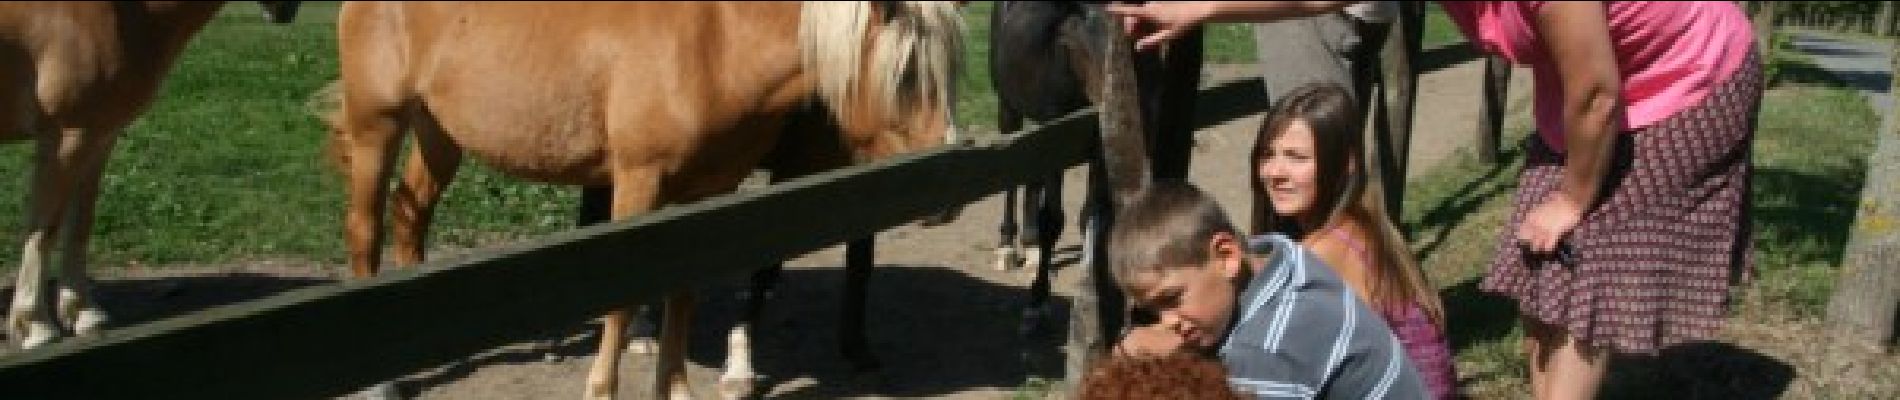 Point of interest Beauraing - Comogne horse-milking farm - Photo